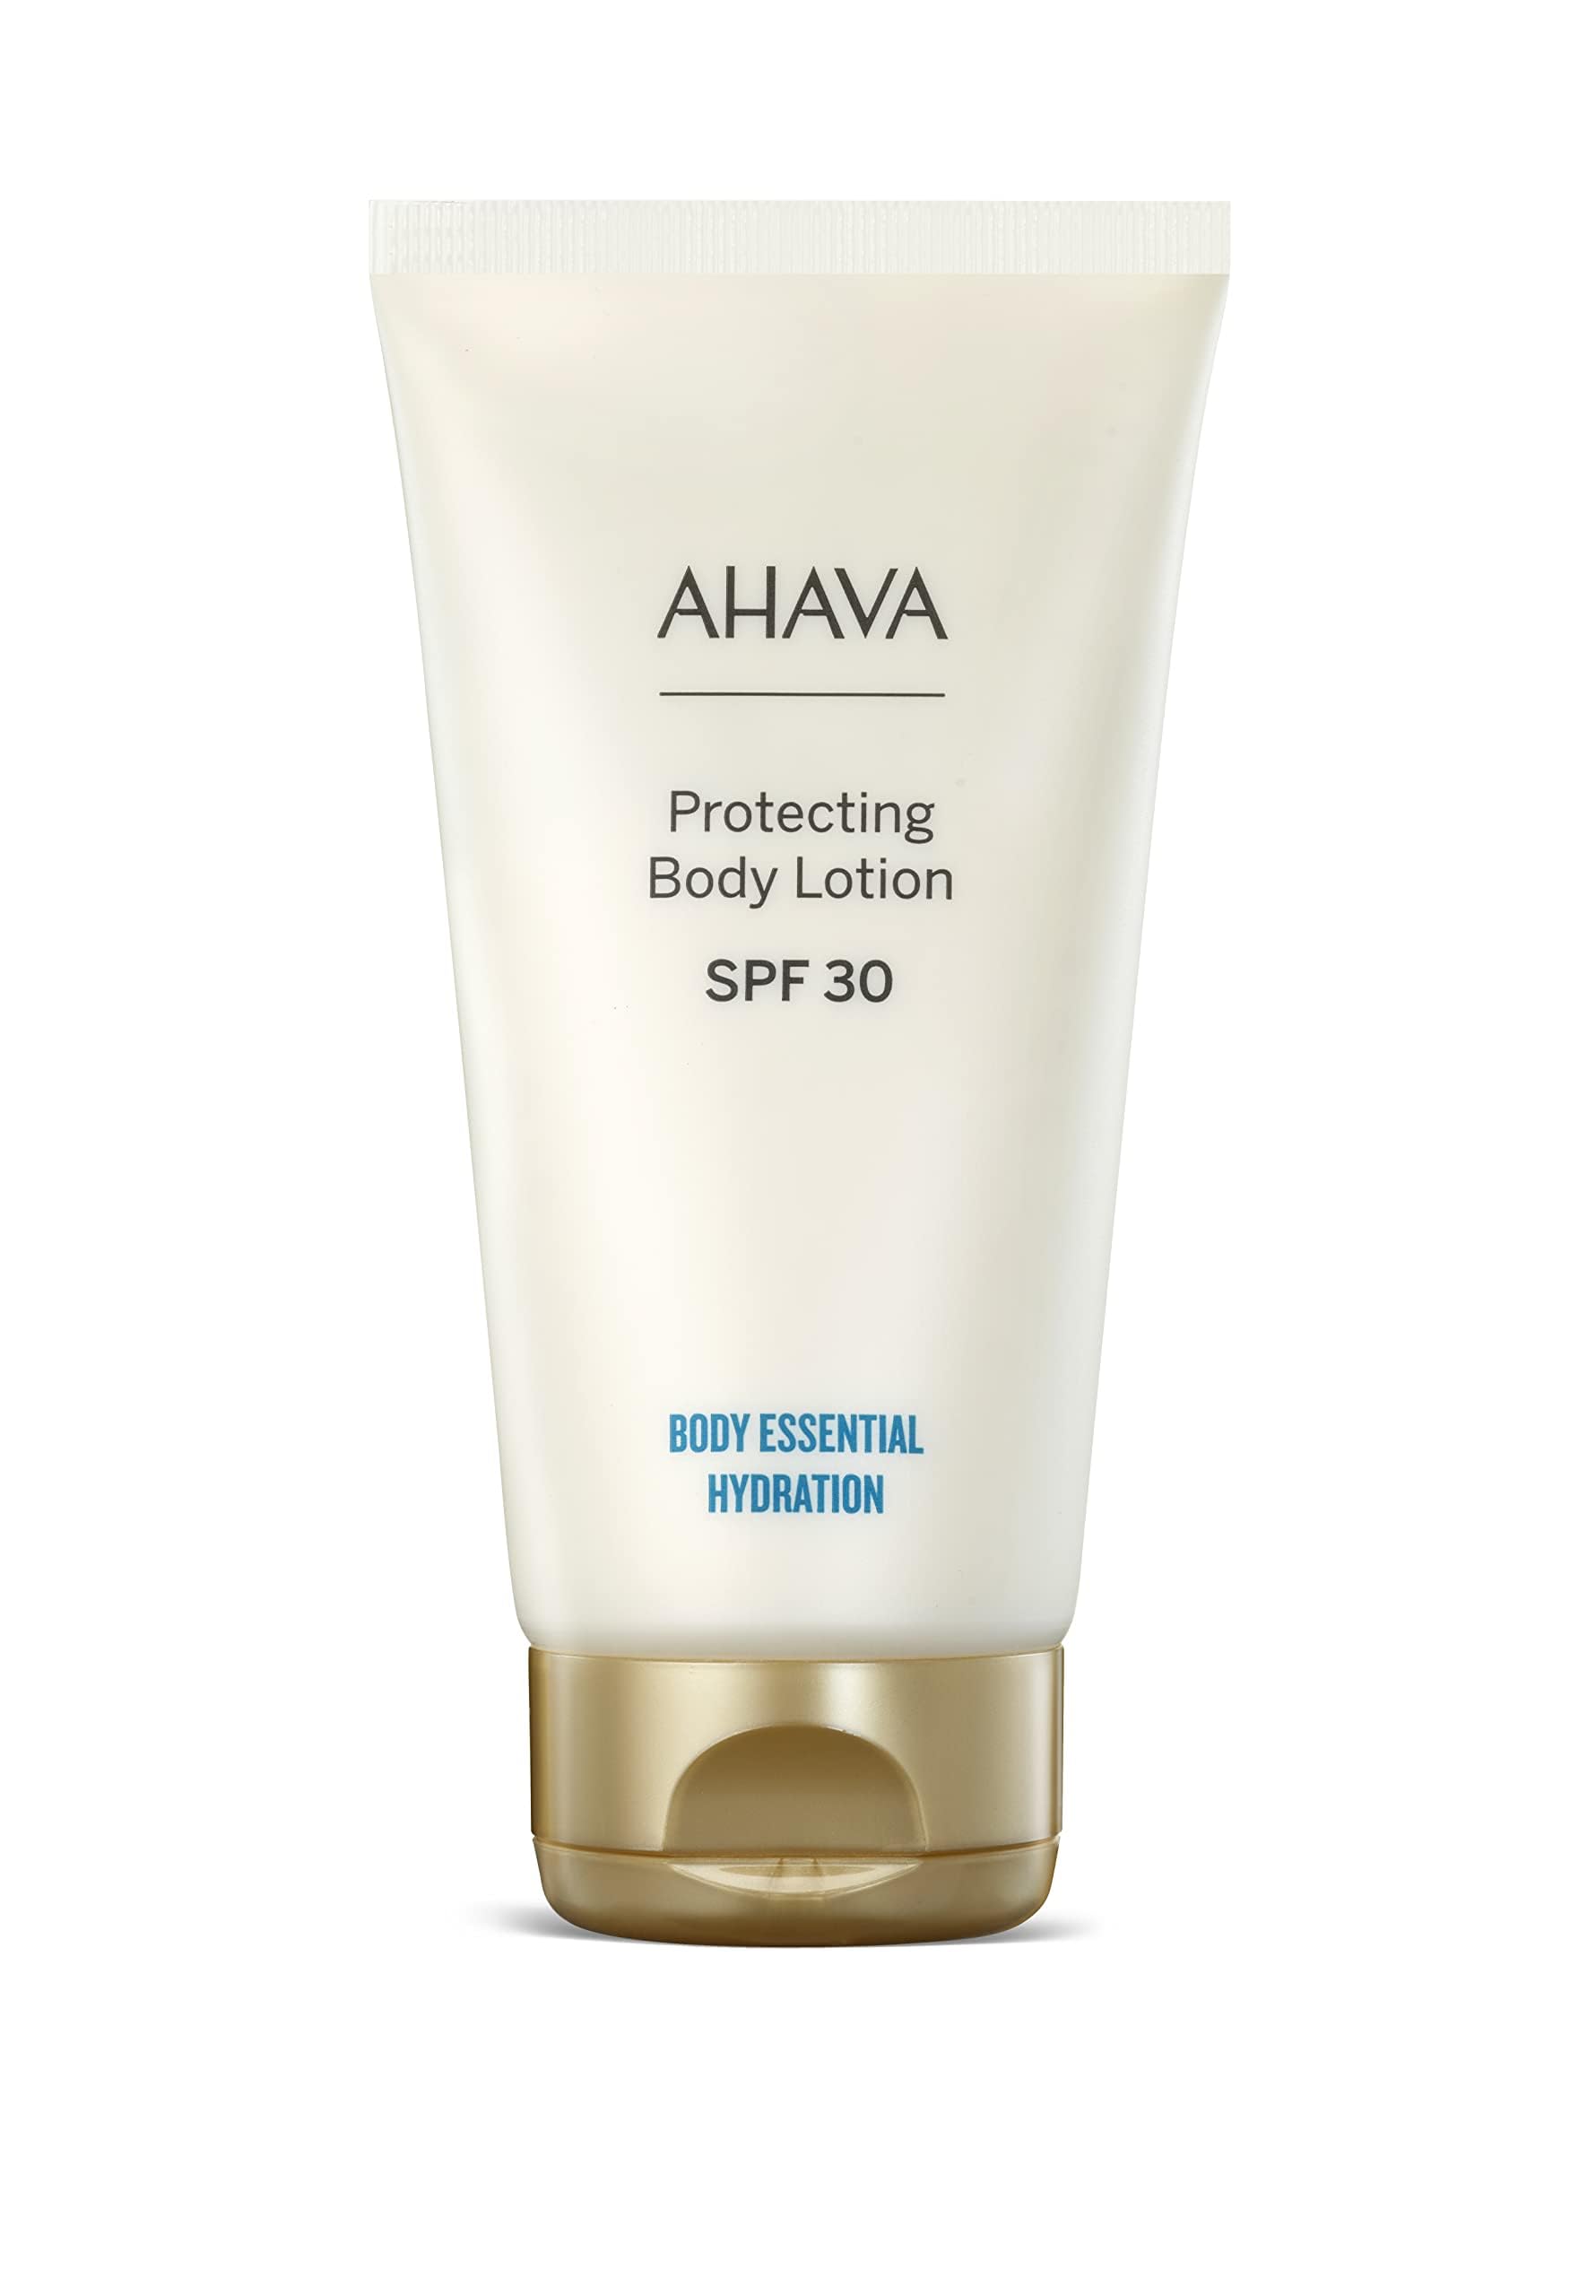 AHAVA Protecting Body Lotion SPF30 PA+++ – Feuchtigkeitsspendende Körpercreme, mit Mineralien aus dem Toten Meer – Antioxidans und Anti-Aging, Sun Protect Lotion Moisturizer – 150 ml